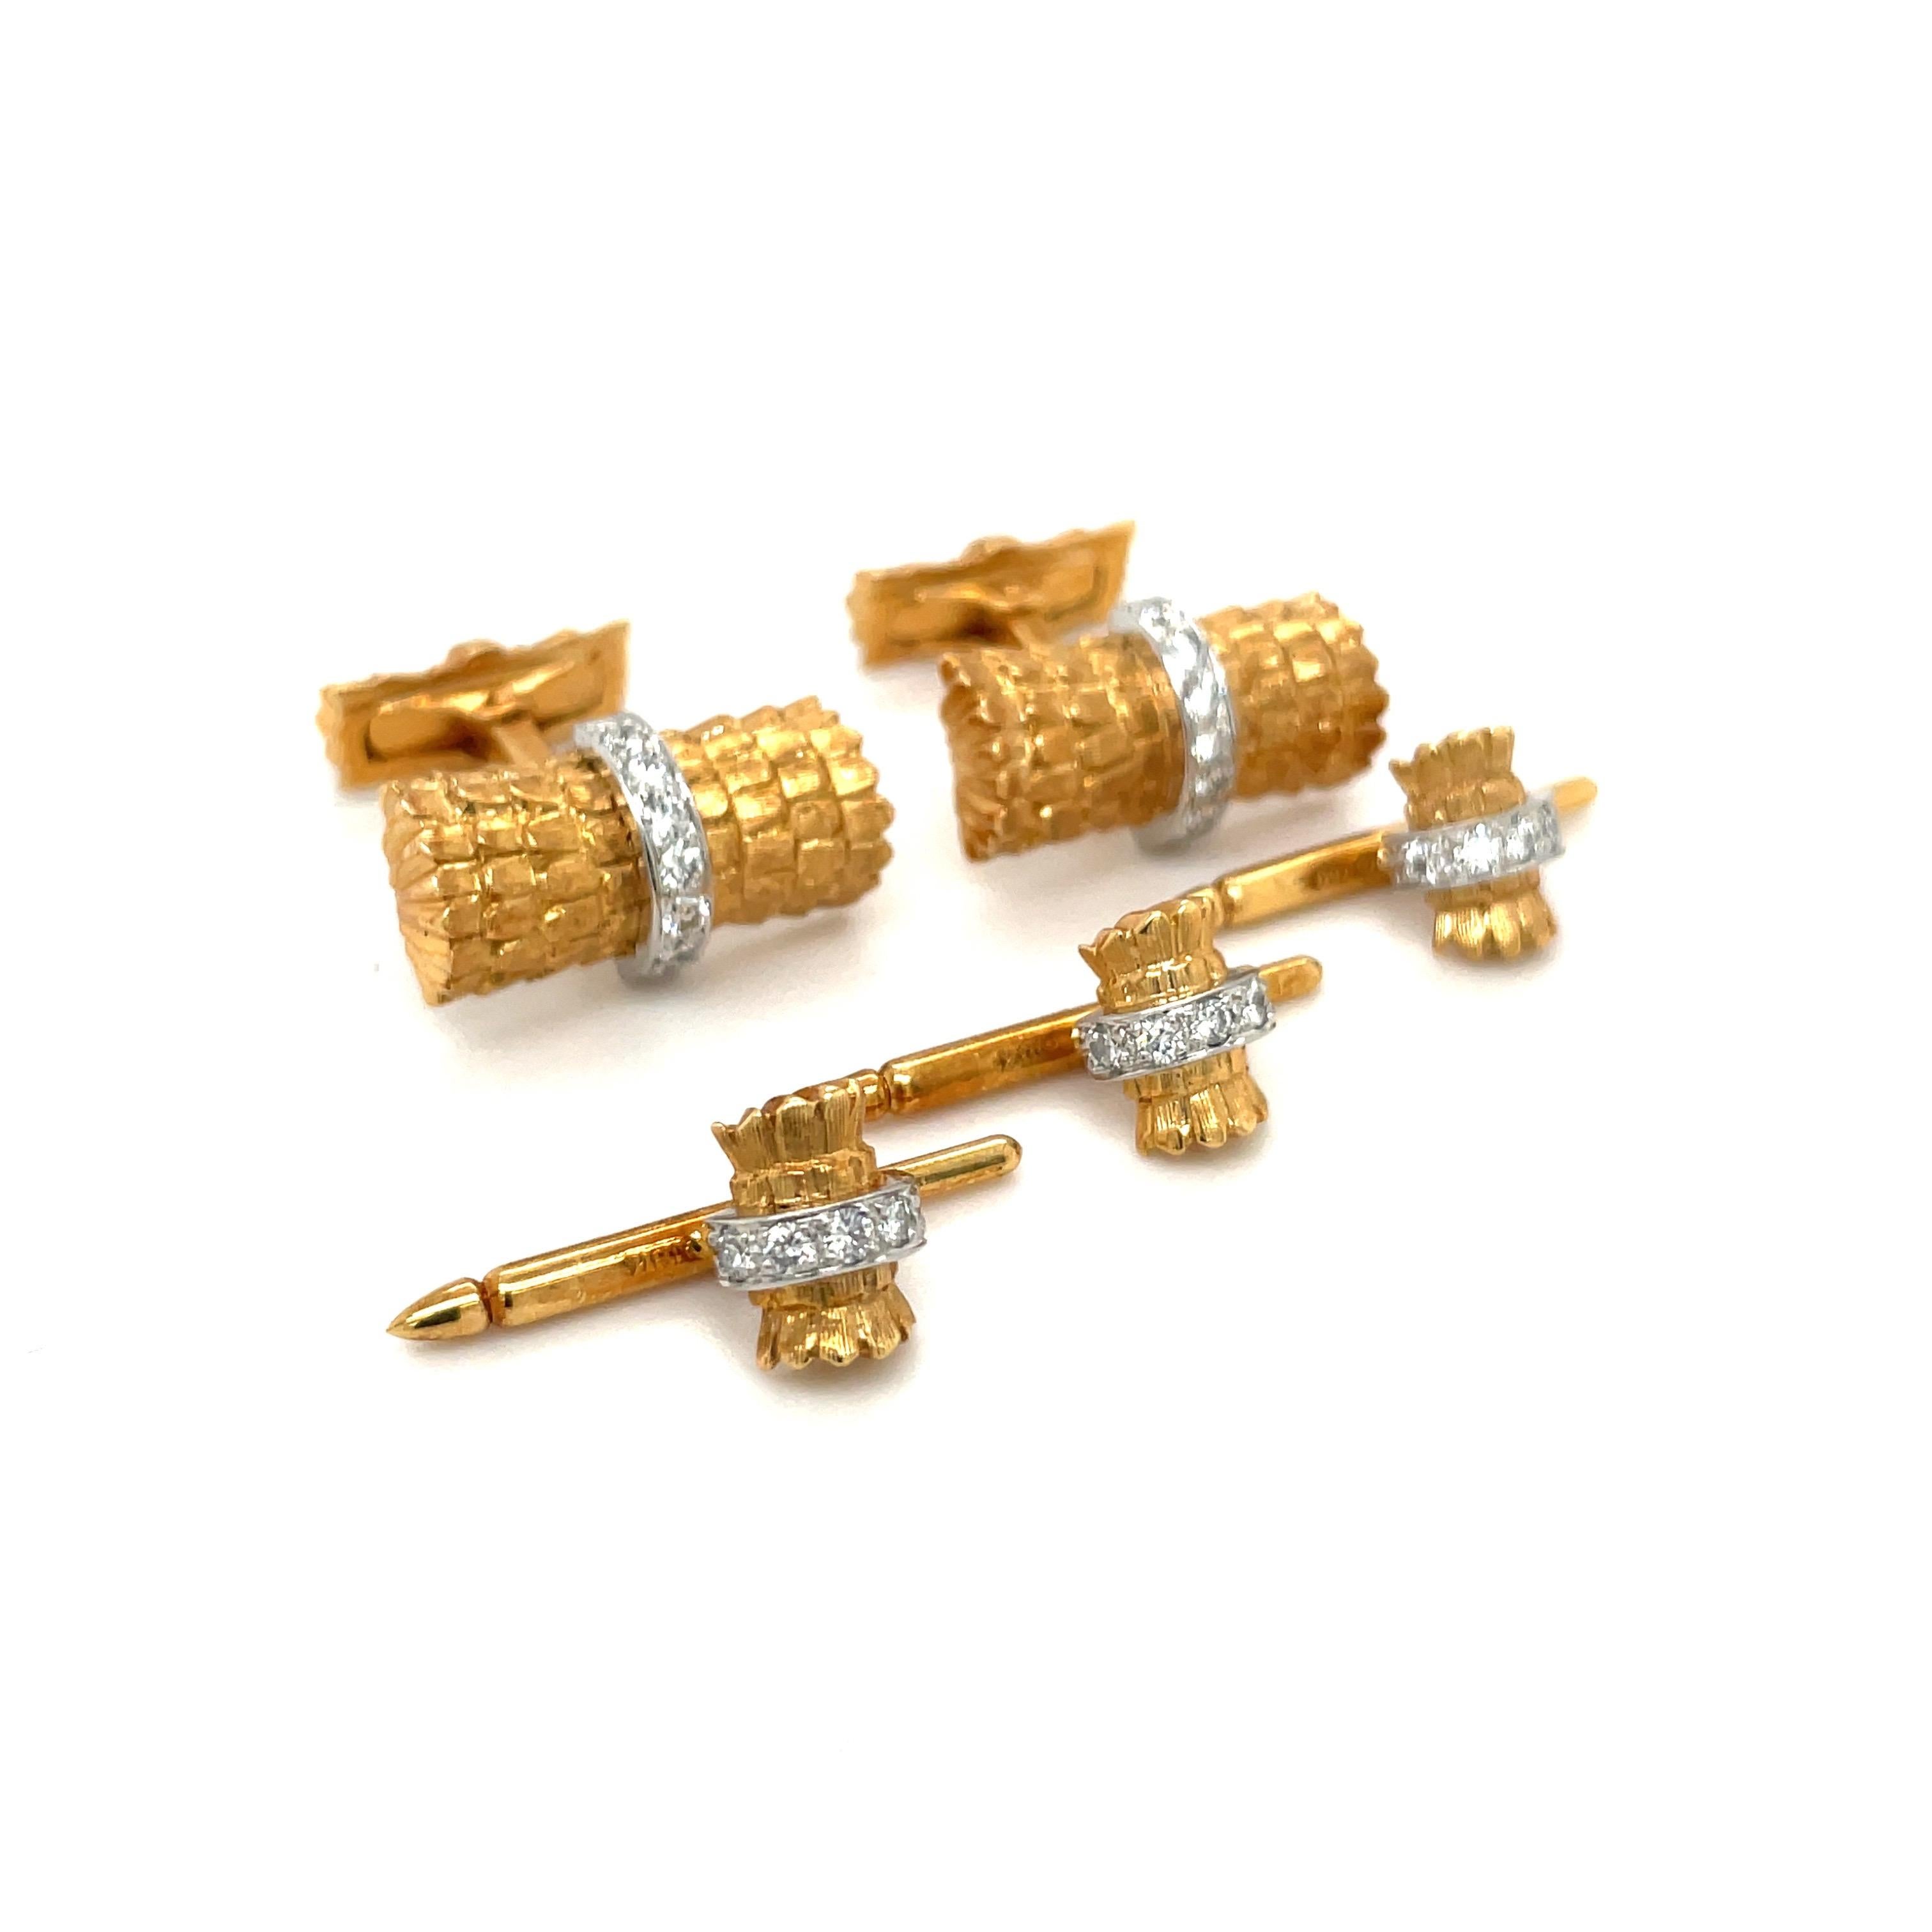 Contemporary Charles Gold Yellow Gold .80Ct Diamond Cuff Links / Studs Dress Set